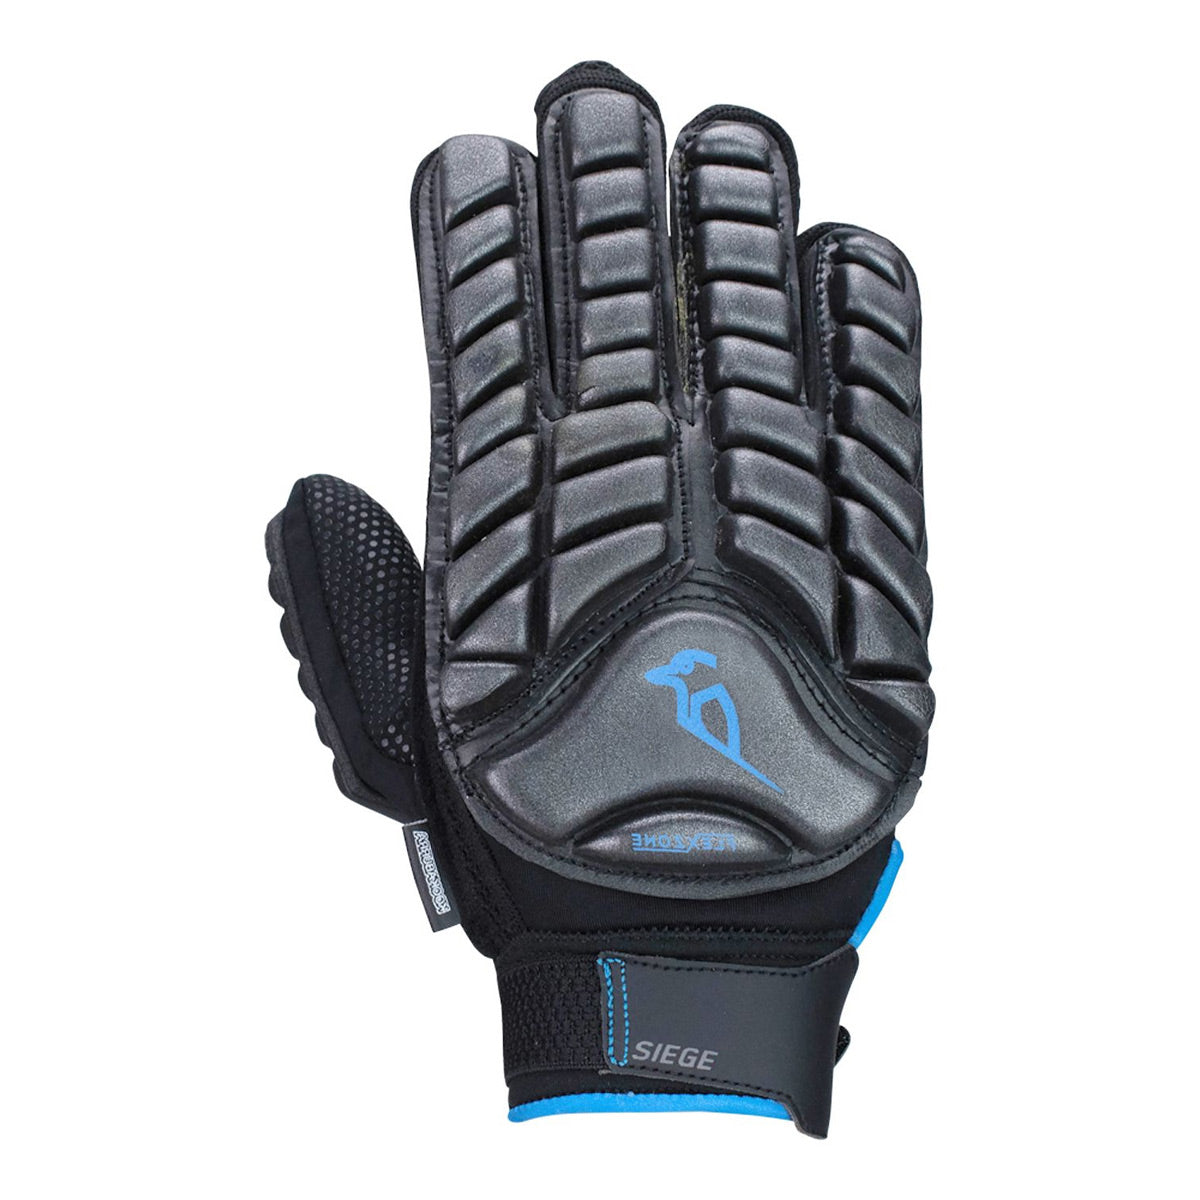 Kookaburra Siege Right Hand Hockey Glove (Black-Blue)